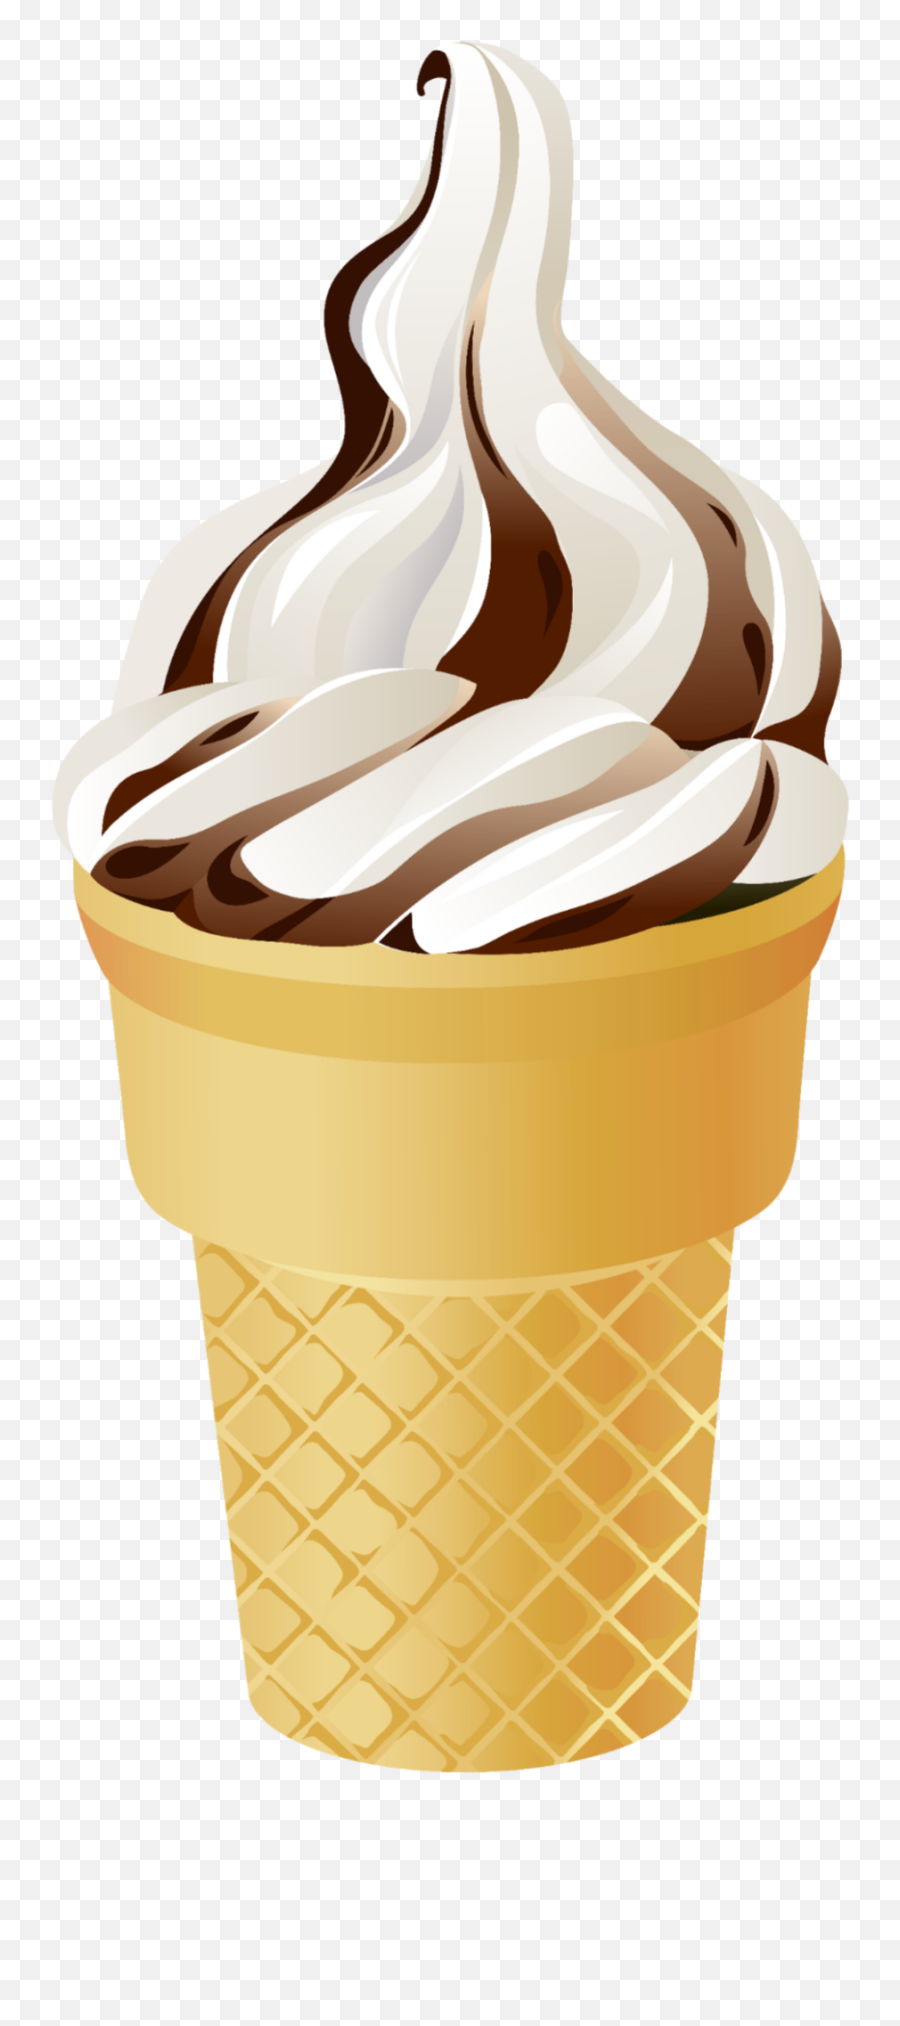 Mq Icecream Chocolate Cold - Chocolate And Vanilla Ice Cream Cone Emoji,Emoji Chocolate Ice Cream